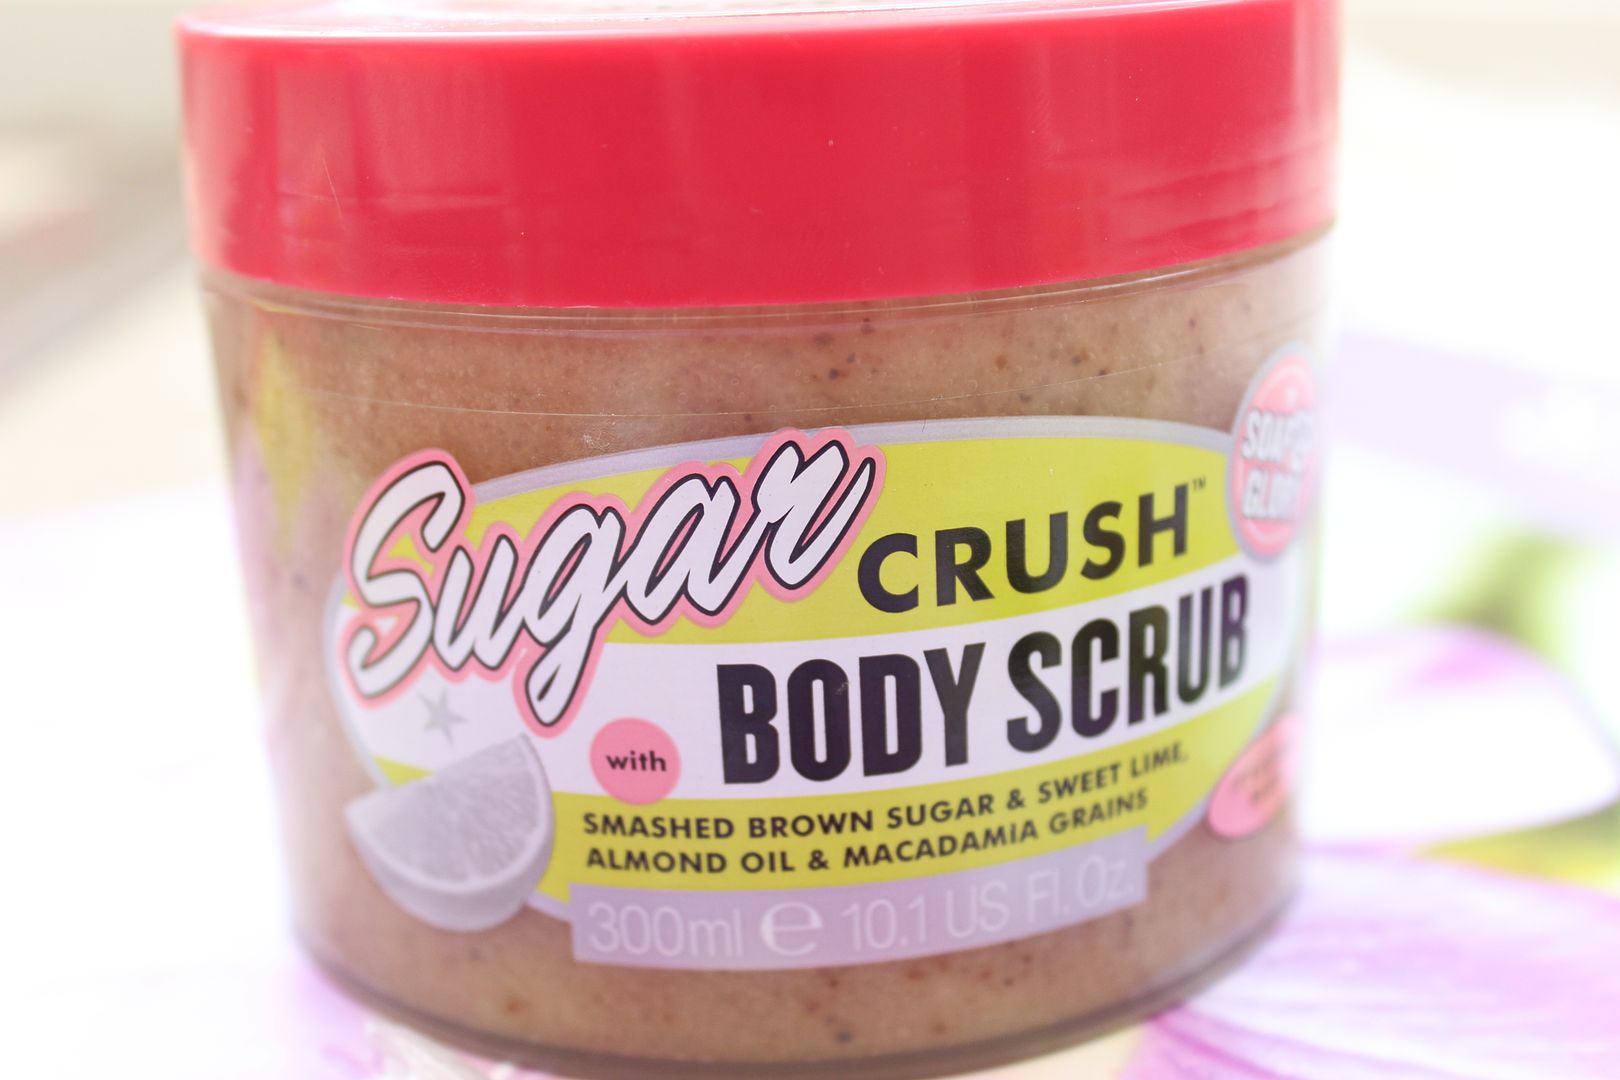 soap & Glory Sugar Crush Body Scrub